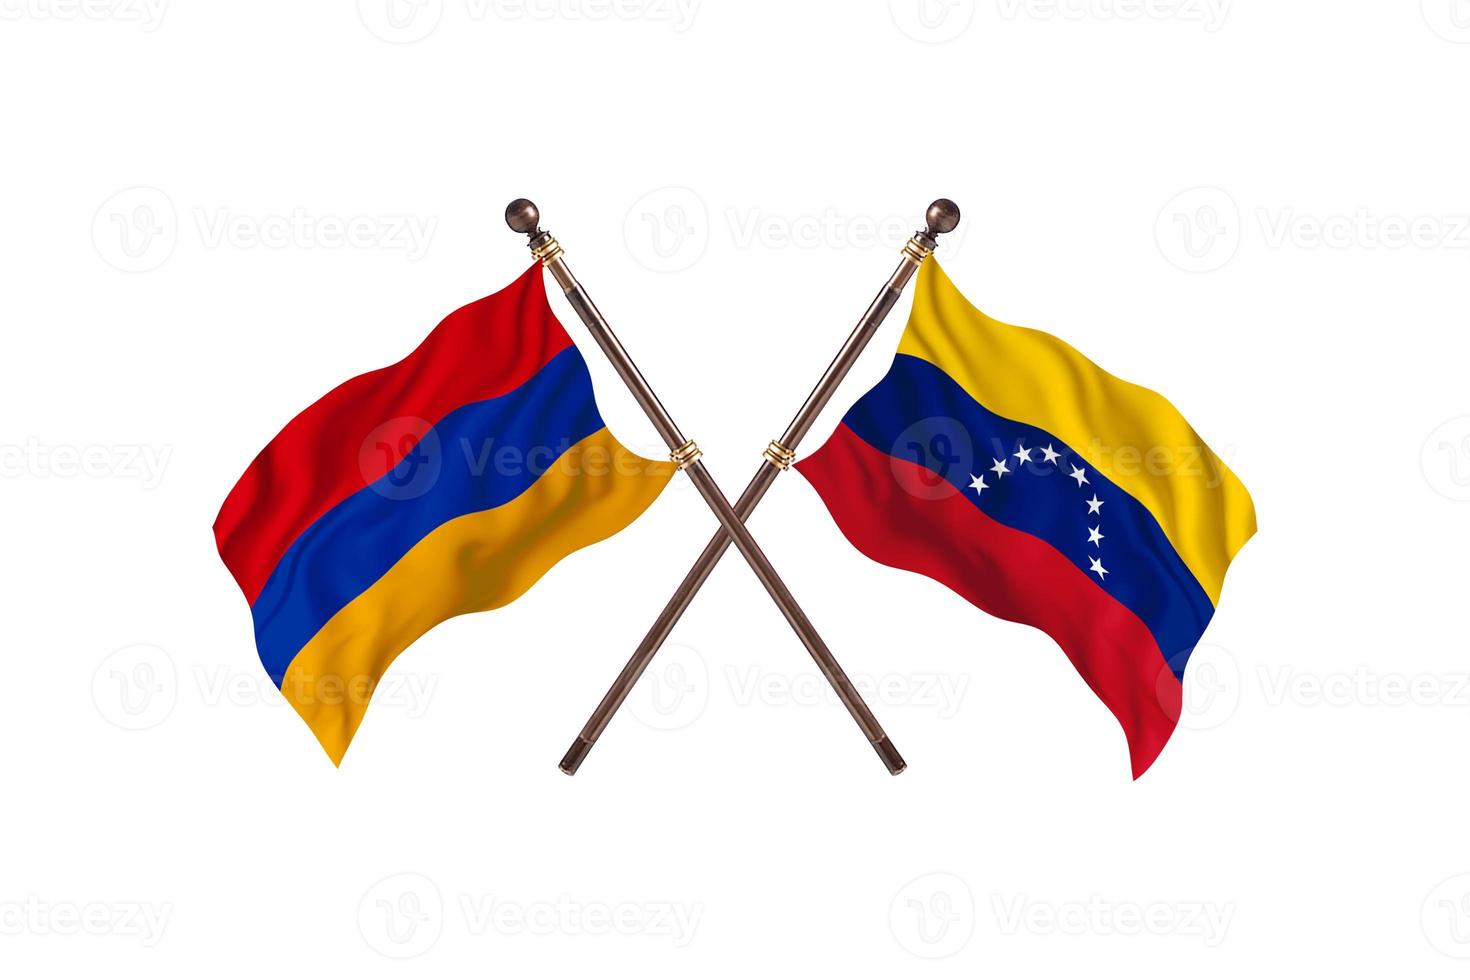 Armenië versus Venezuela twee land vlaggen foto